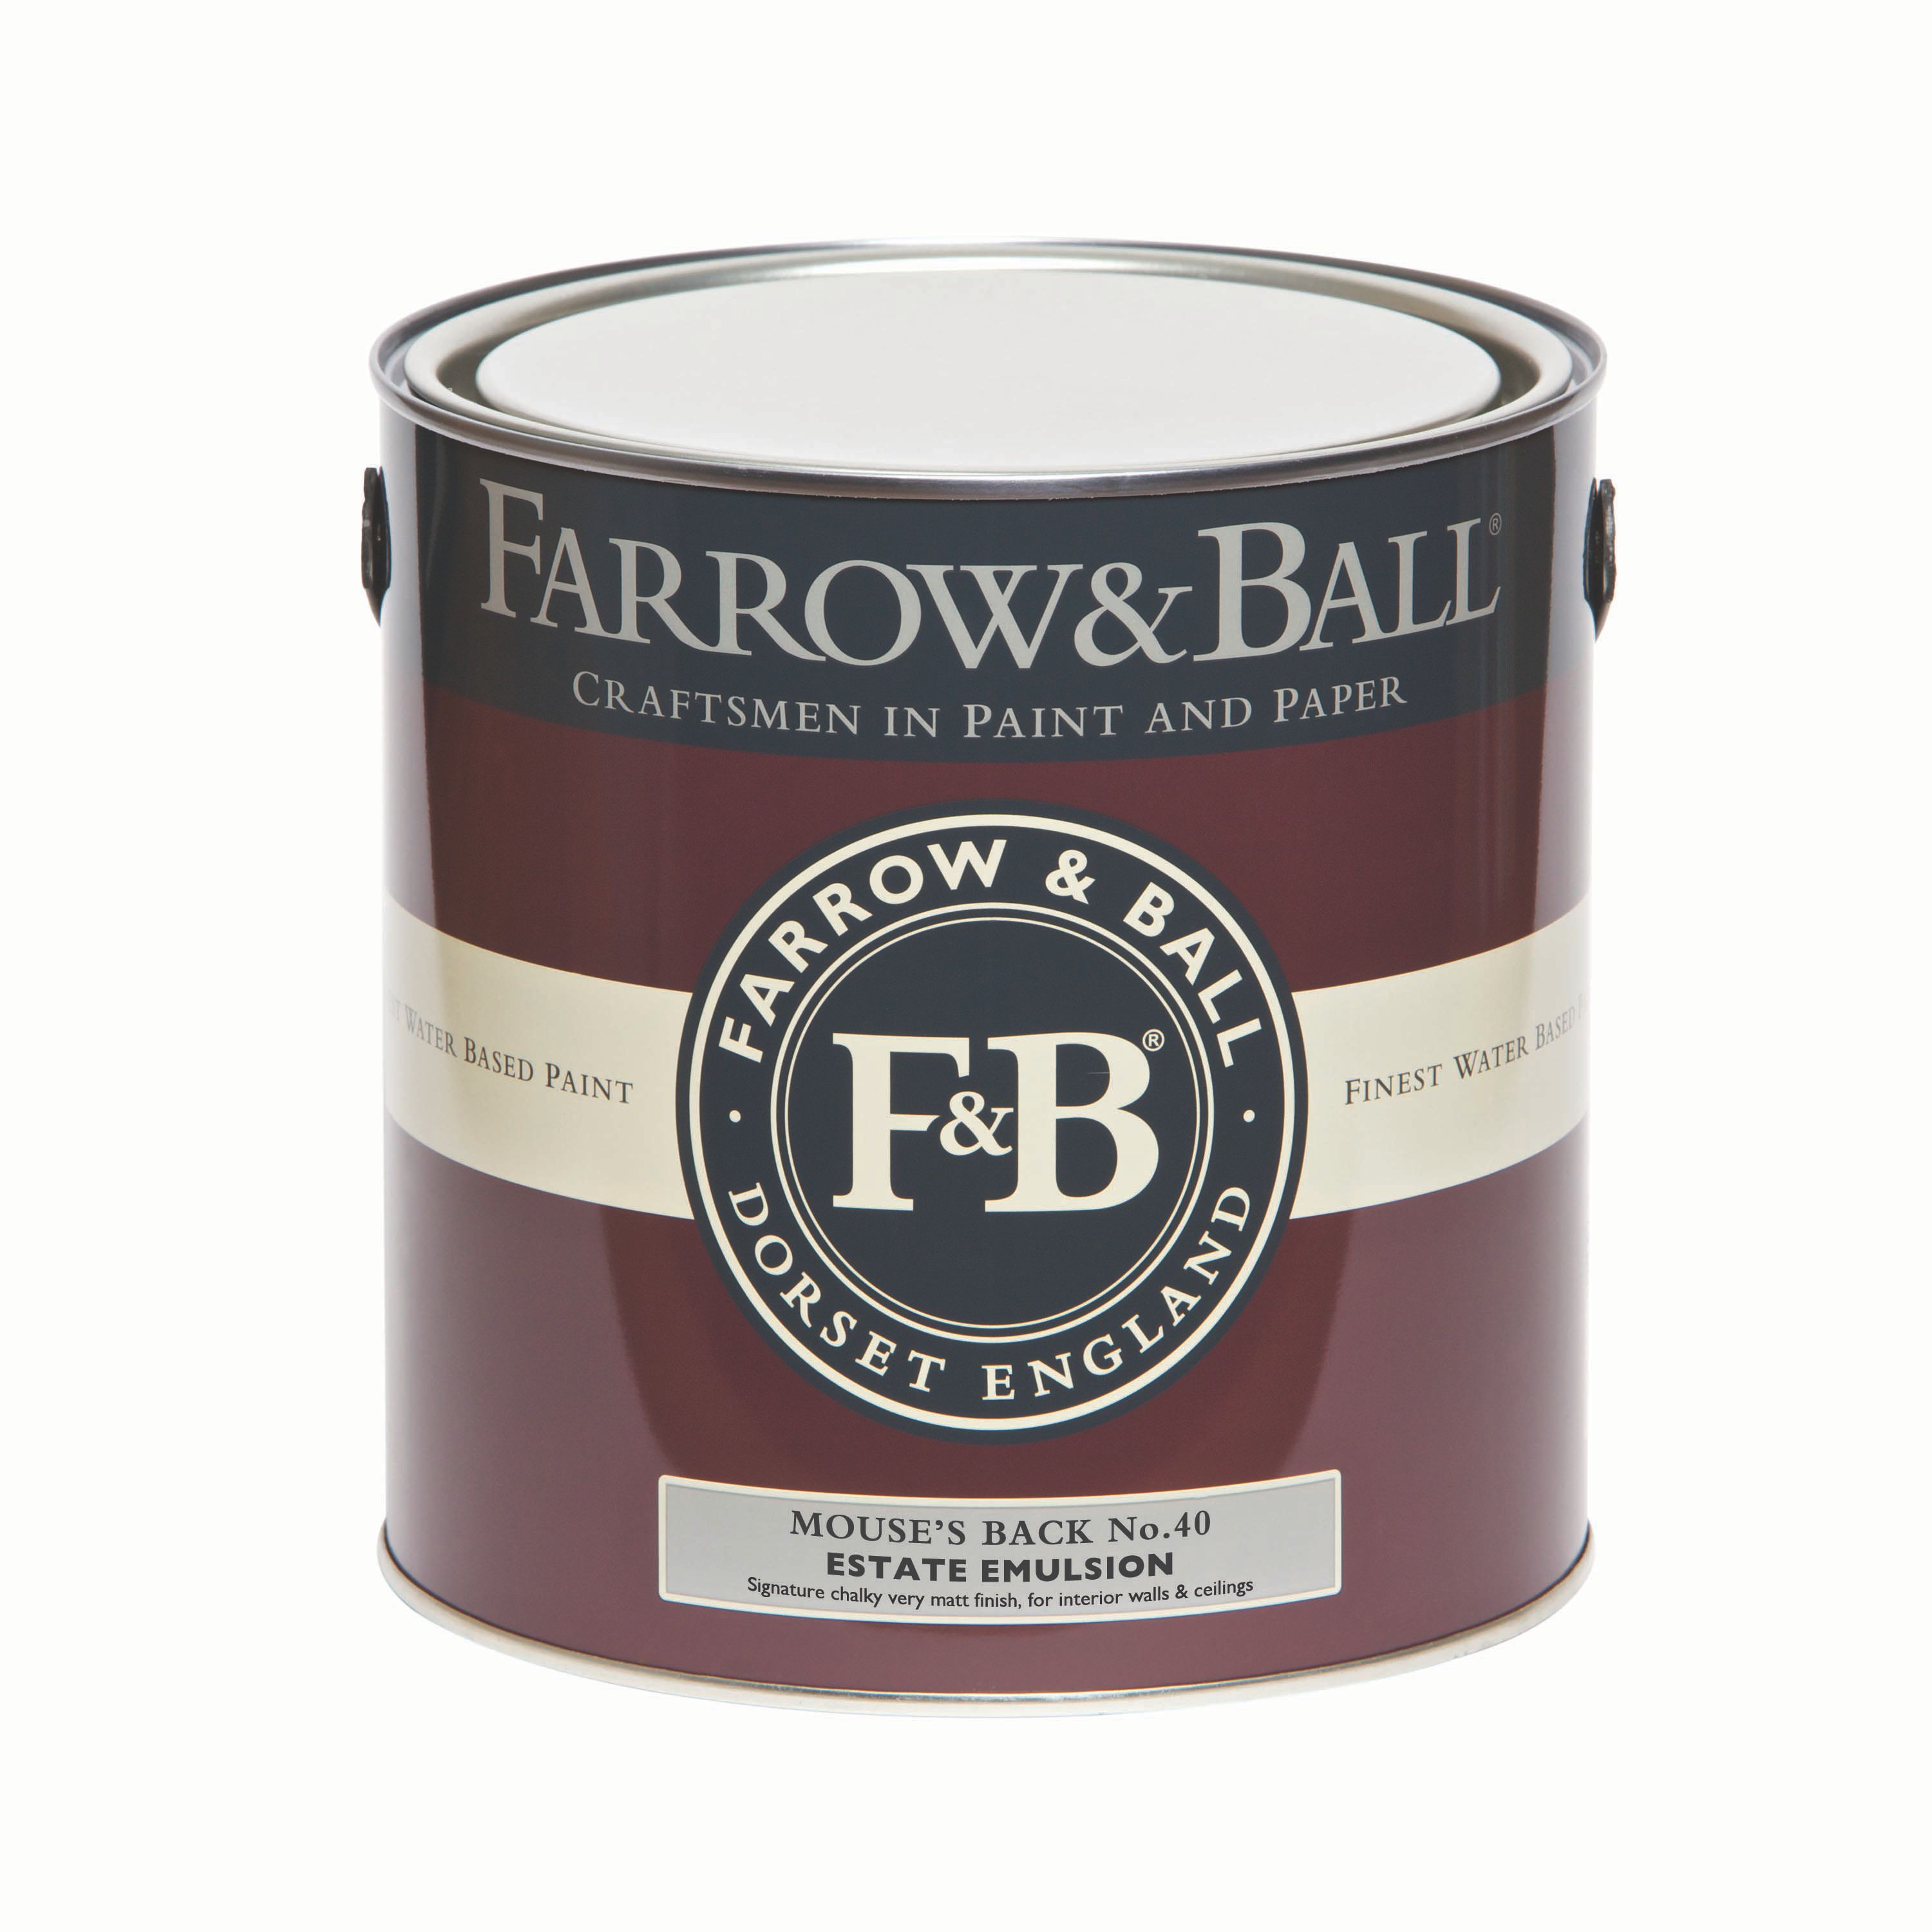 Farrow & Ball Estate Mouse's back No.40 Matt Emulsion paint, 2.5L